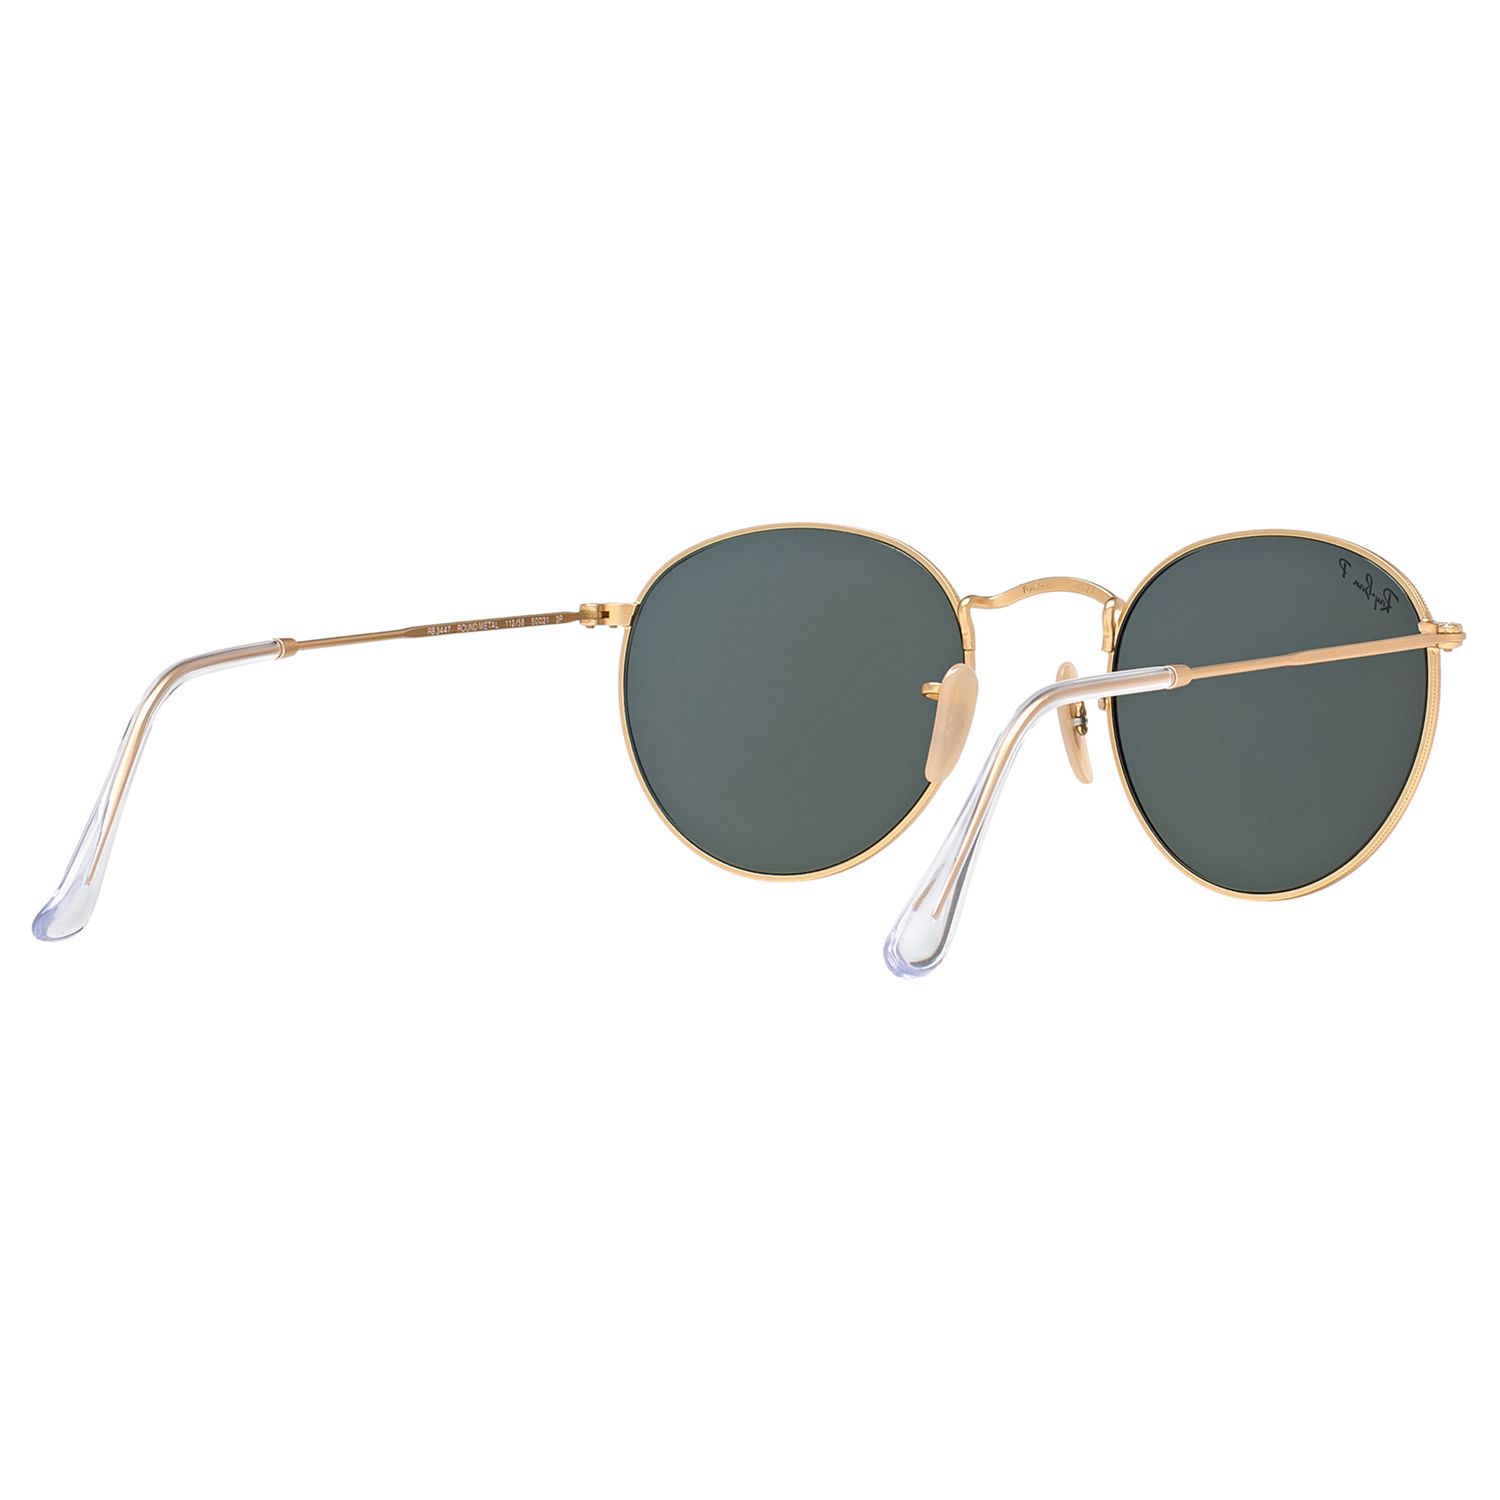 Buy Ray-Ban RB3447 Polarised Round Sunglasses, Gold/Dark Green Online at johnlewis.com